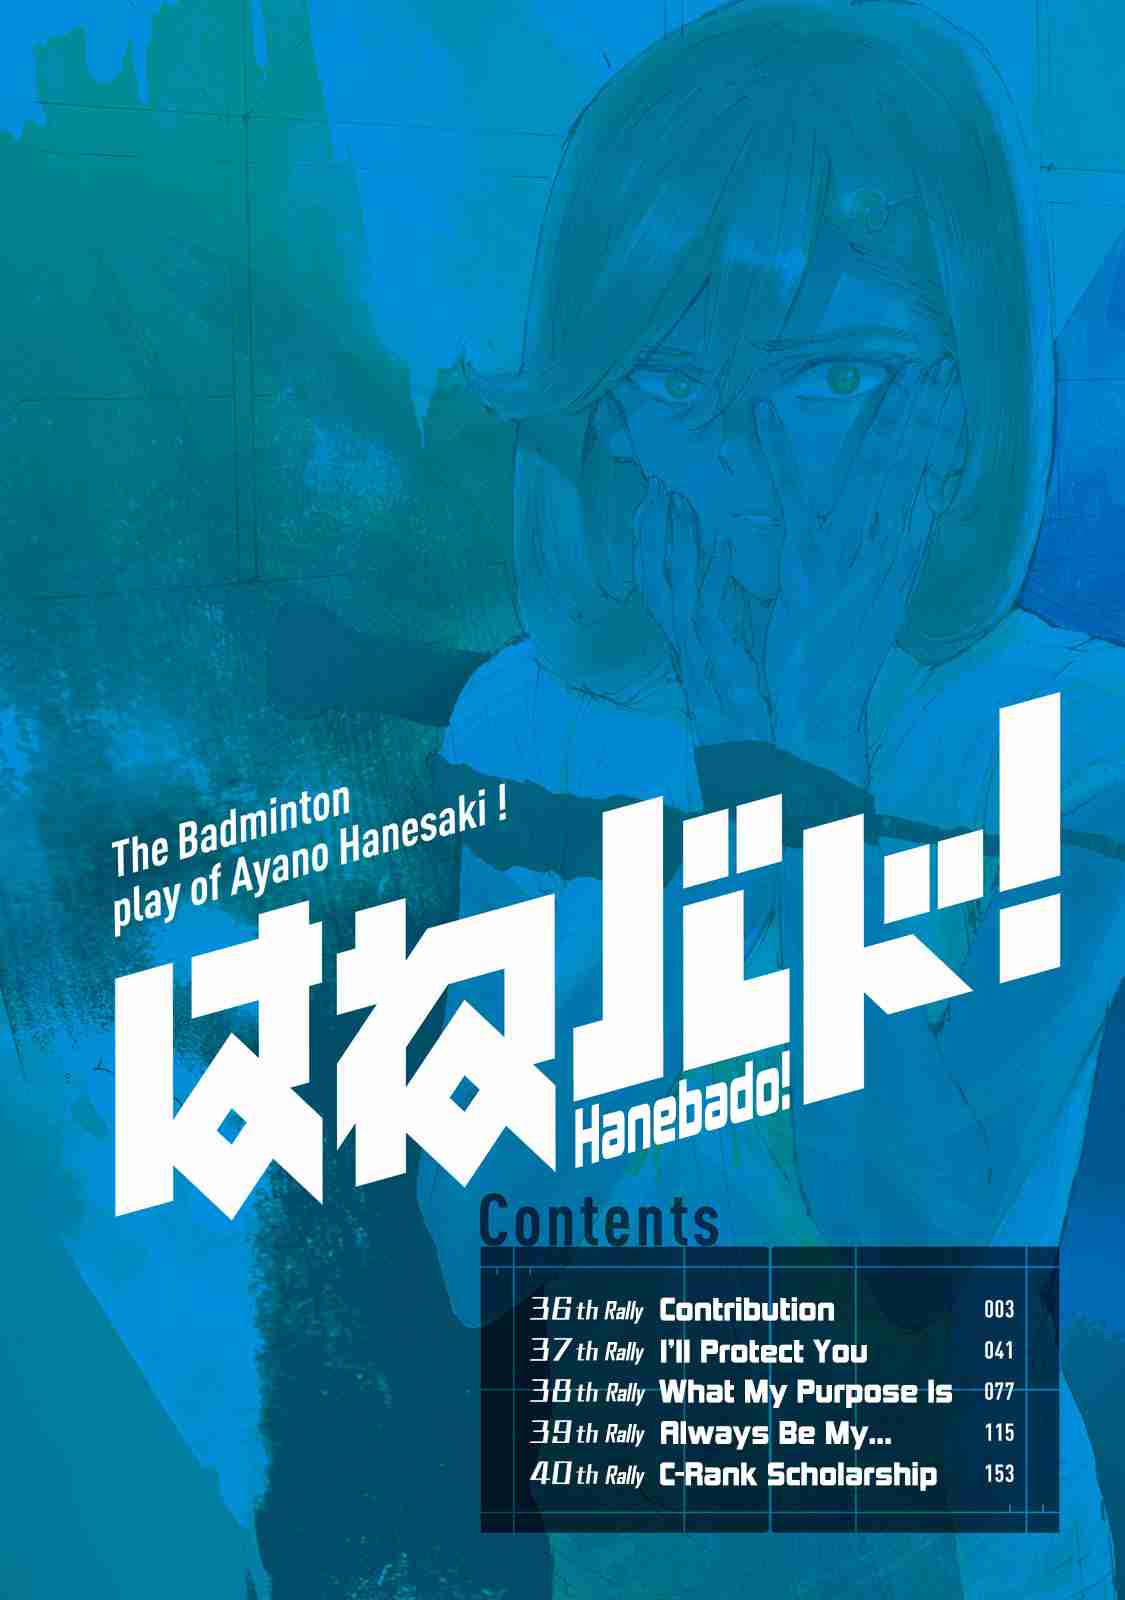 Hanebado! Vol. 8 Ch. 36 Contribution